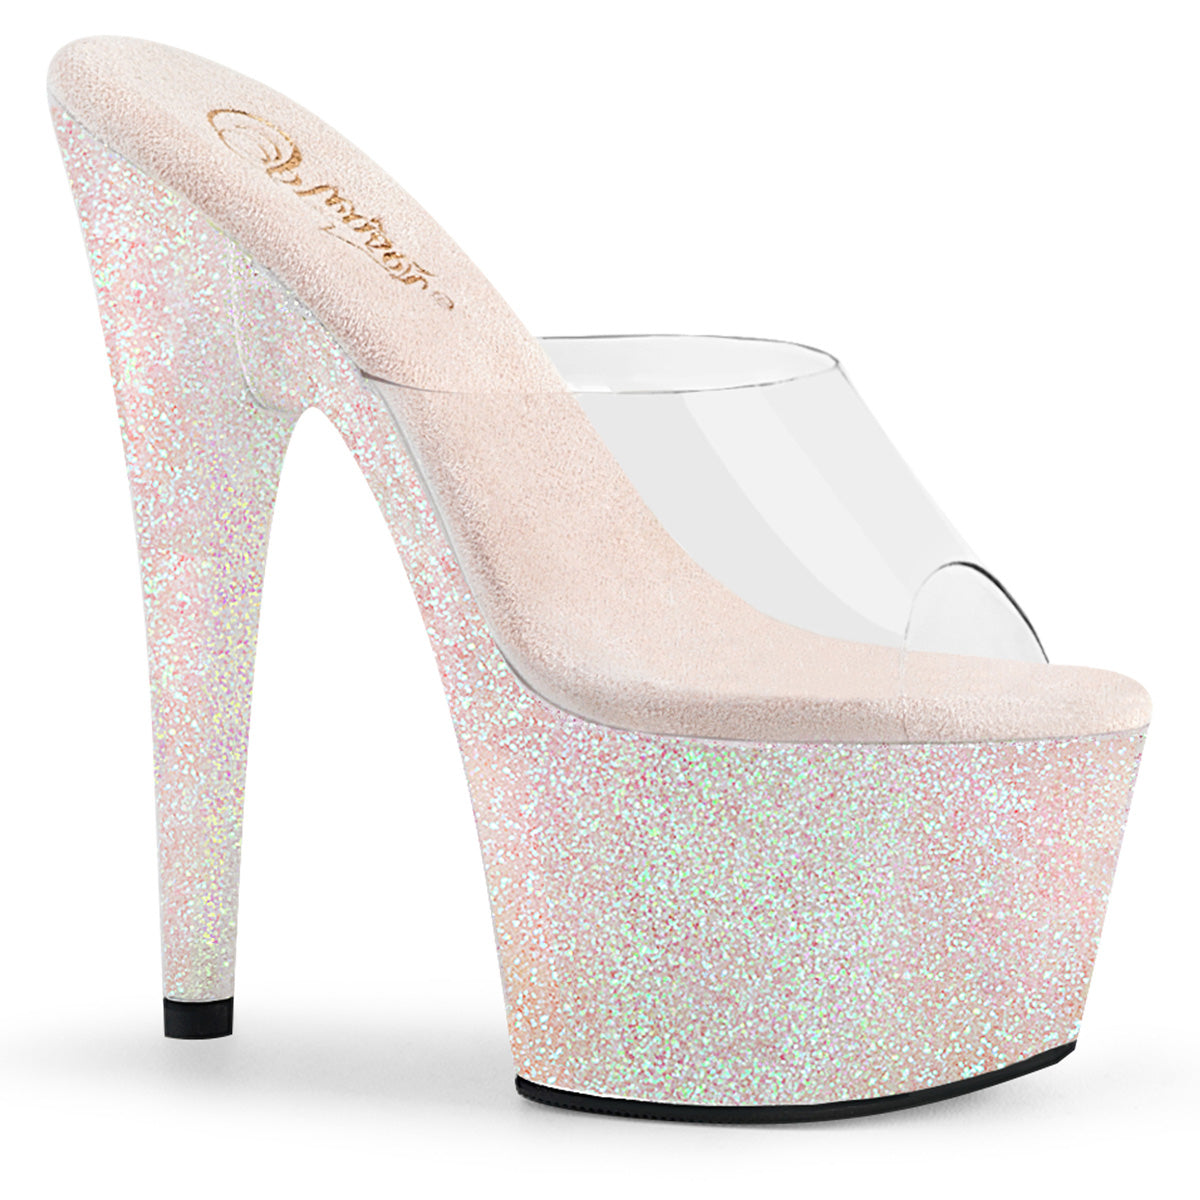 Adore-701hmg 7 "Heel Clear Opal Glitter Pole Dancer Shoes